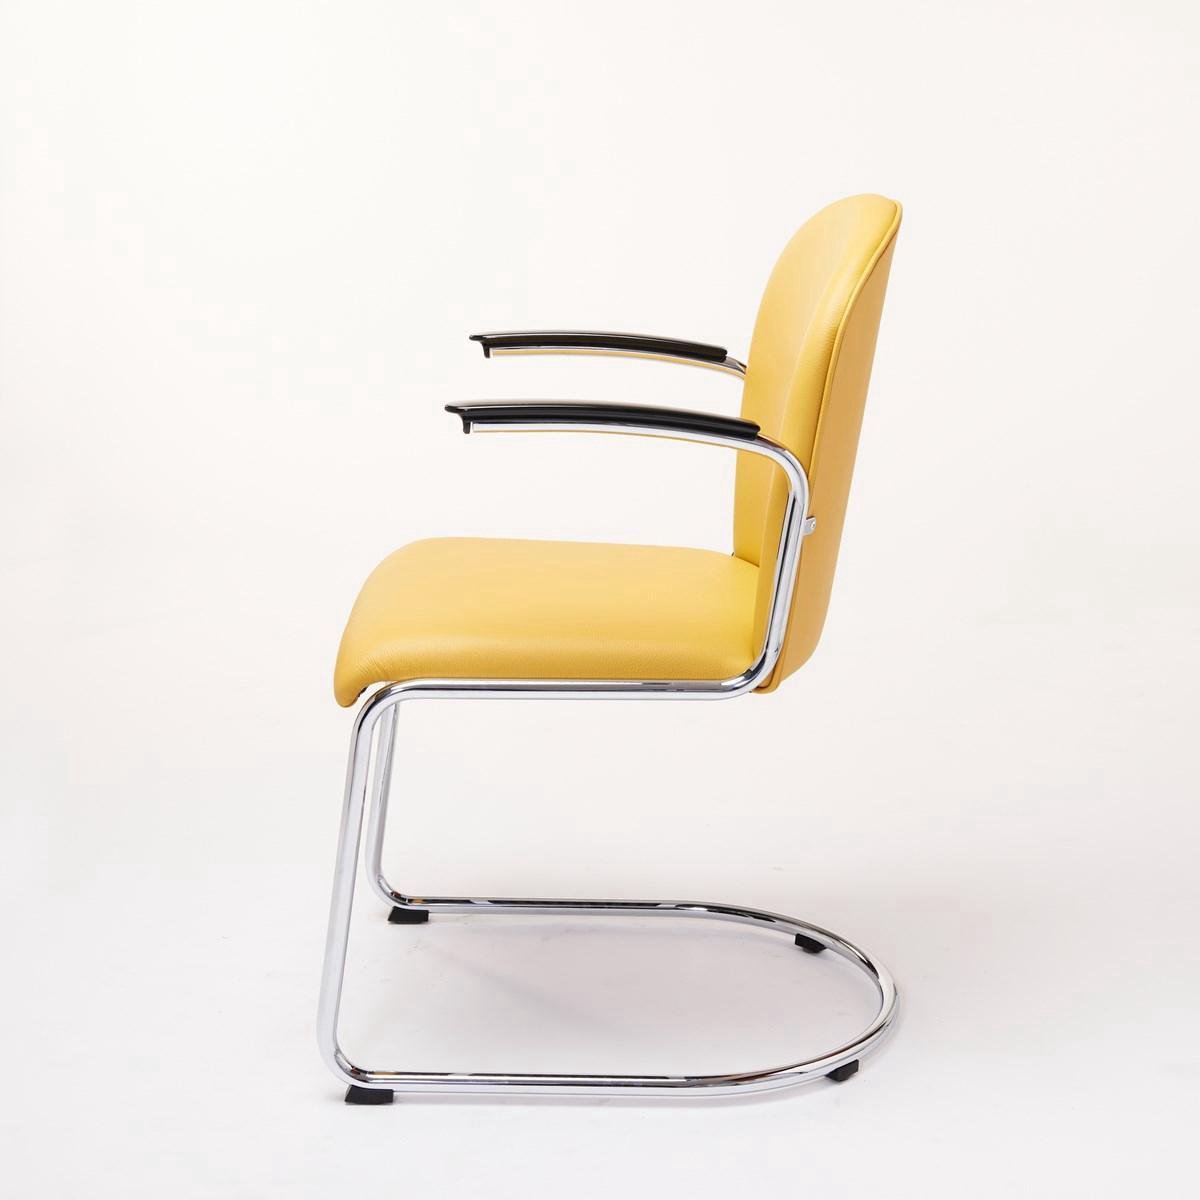 Gispen stoel - 413 RL | bol.com